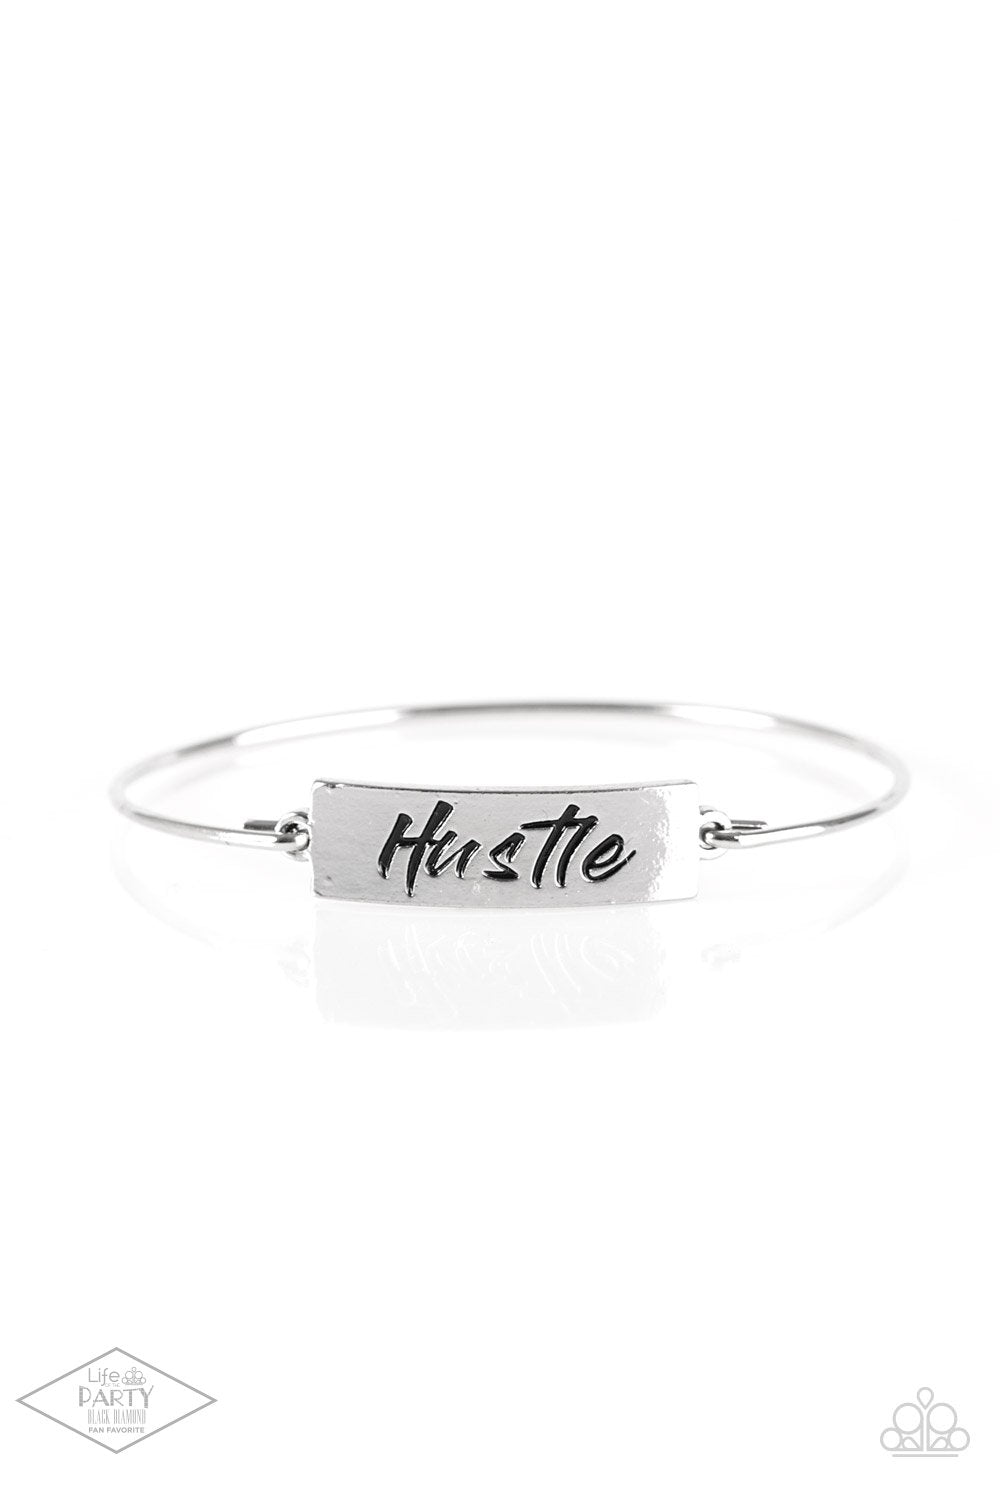 Hustle Hard Silver Bangle Bracelet - Paparazzi Accessories - lightbox -CarasShop.com - $5 Jewelry by Cara Jewels